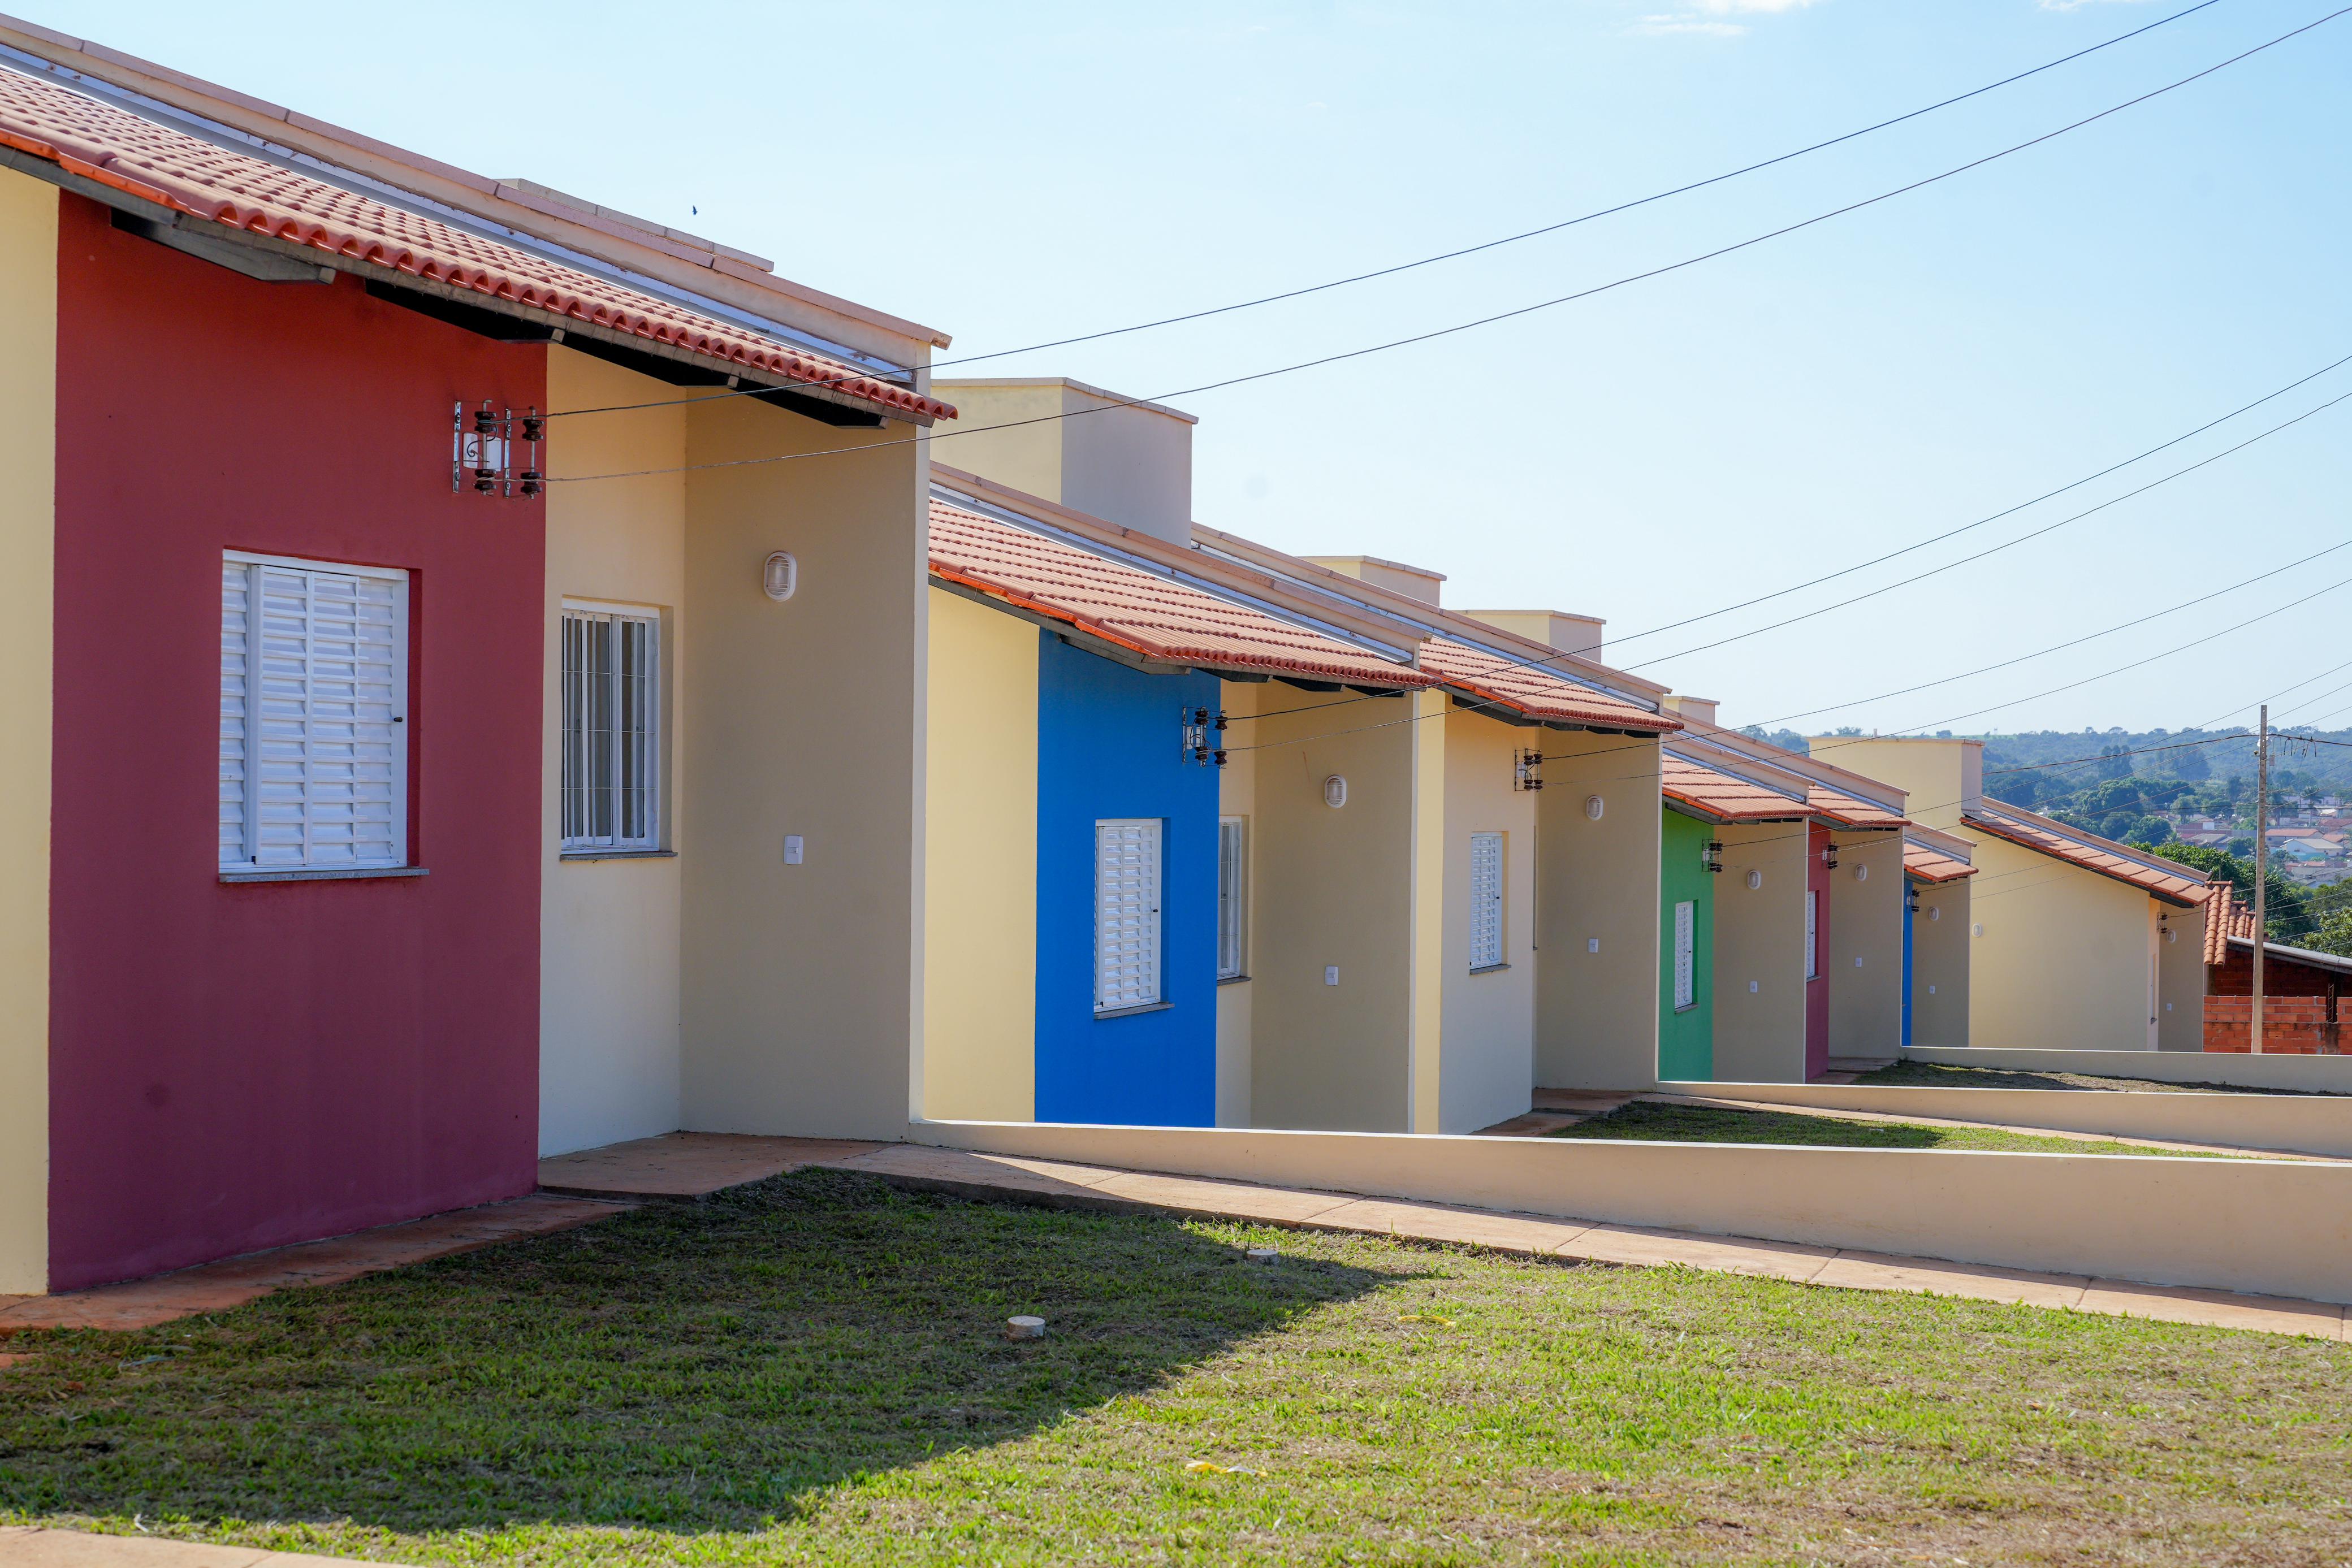 Governo de Goiás entrega 57 casas a custo zero em Ipameri